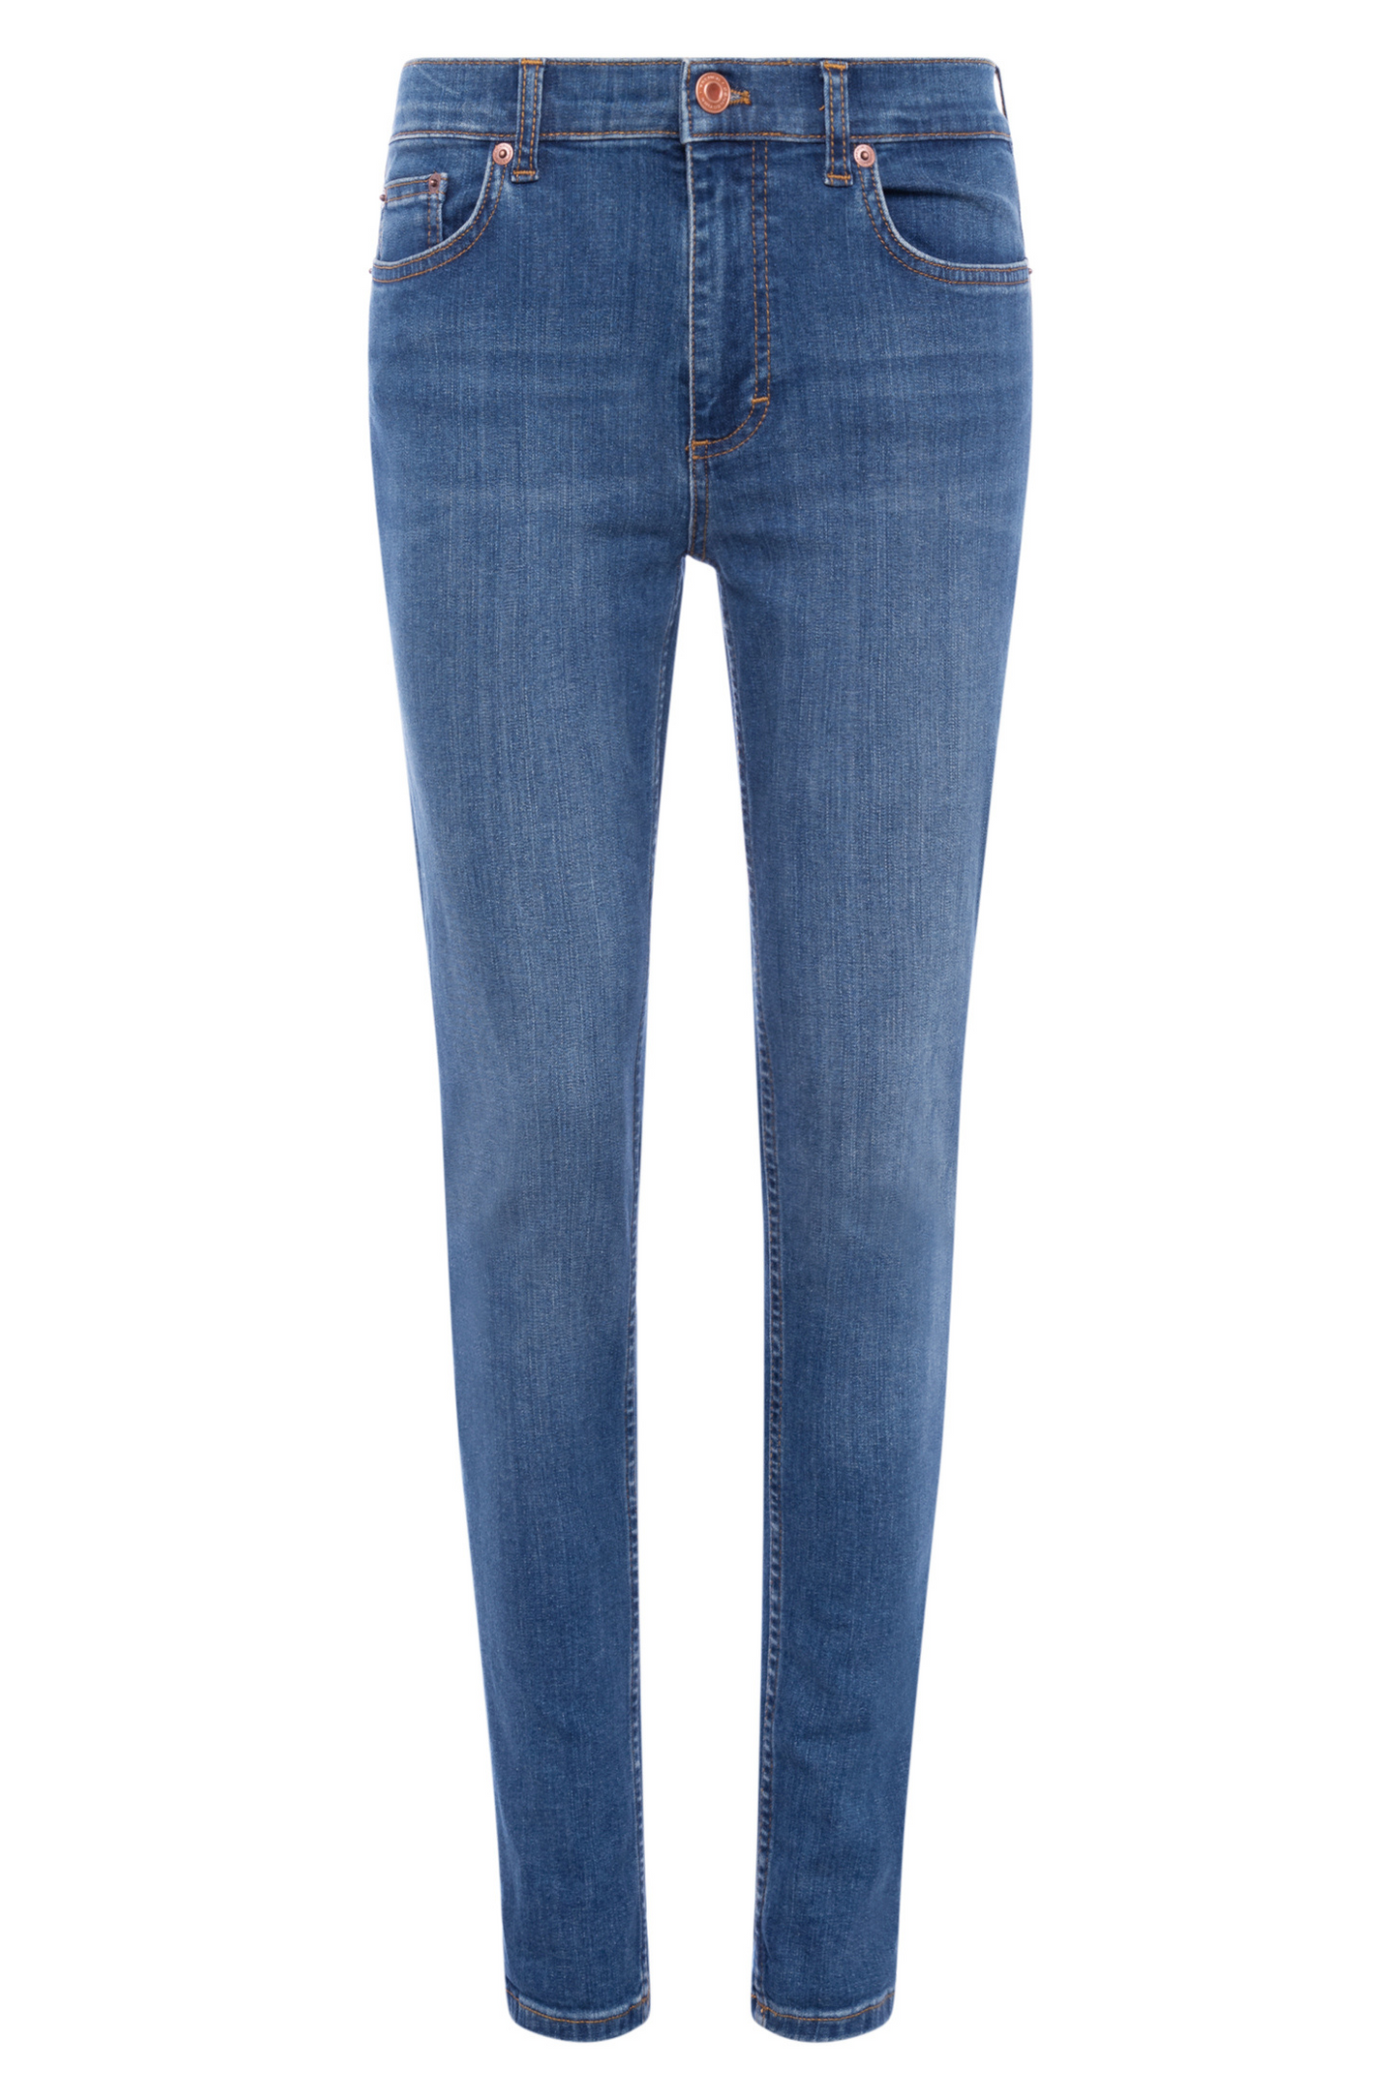 French Connection Blue Vintage Skinny Jeans 74NZB | Jezabel Boutique